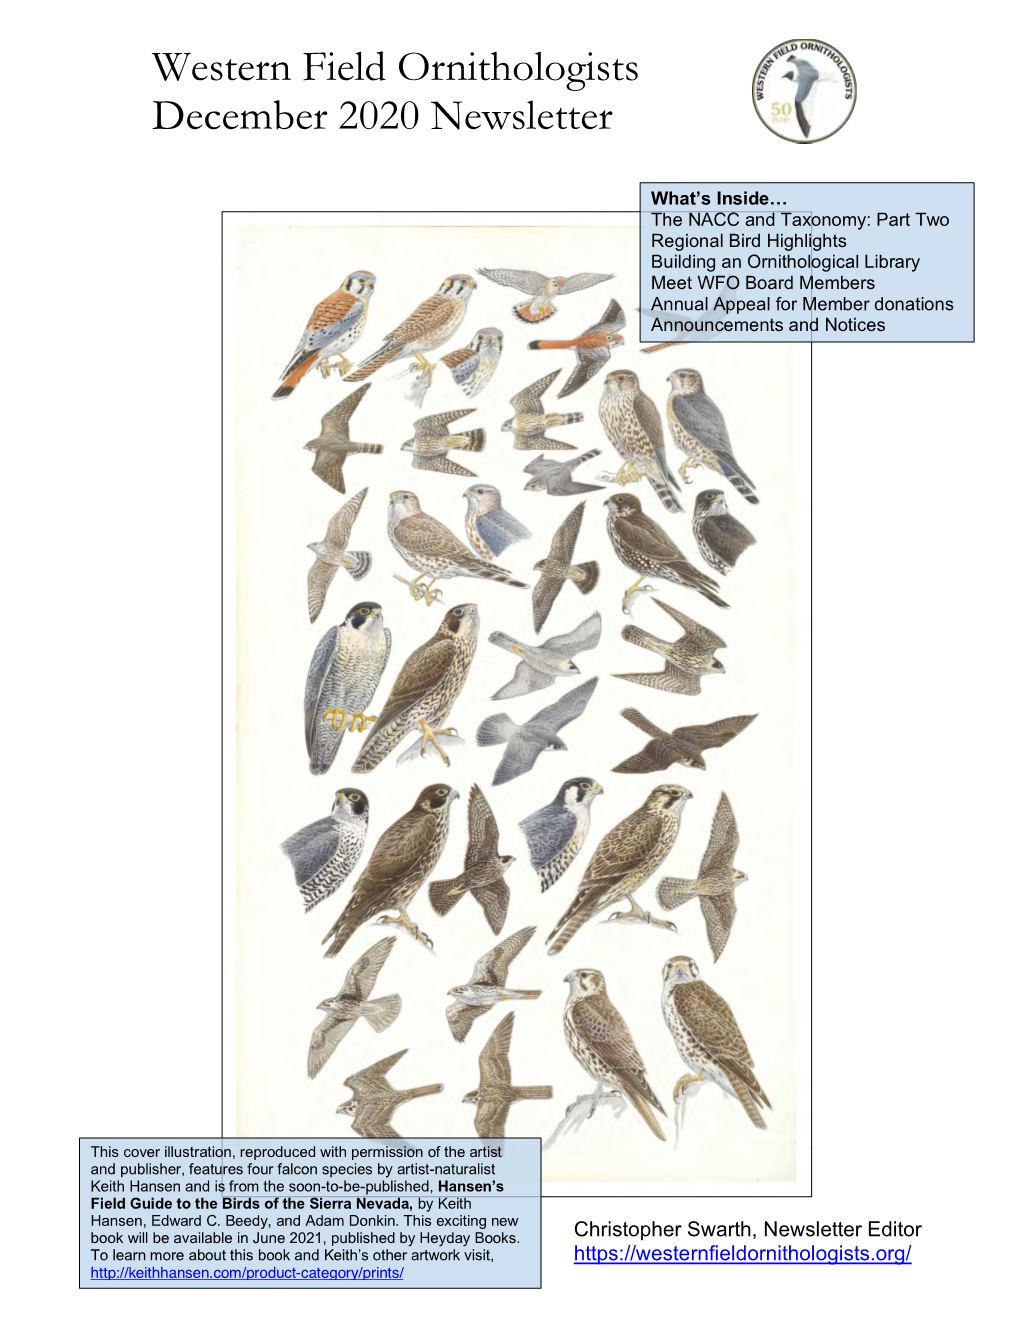 Western Field Ornithologists December 2020 Newsletter